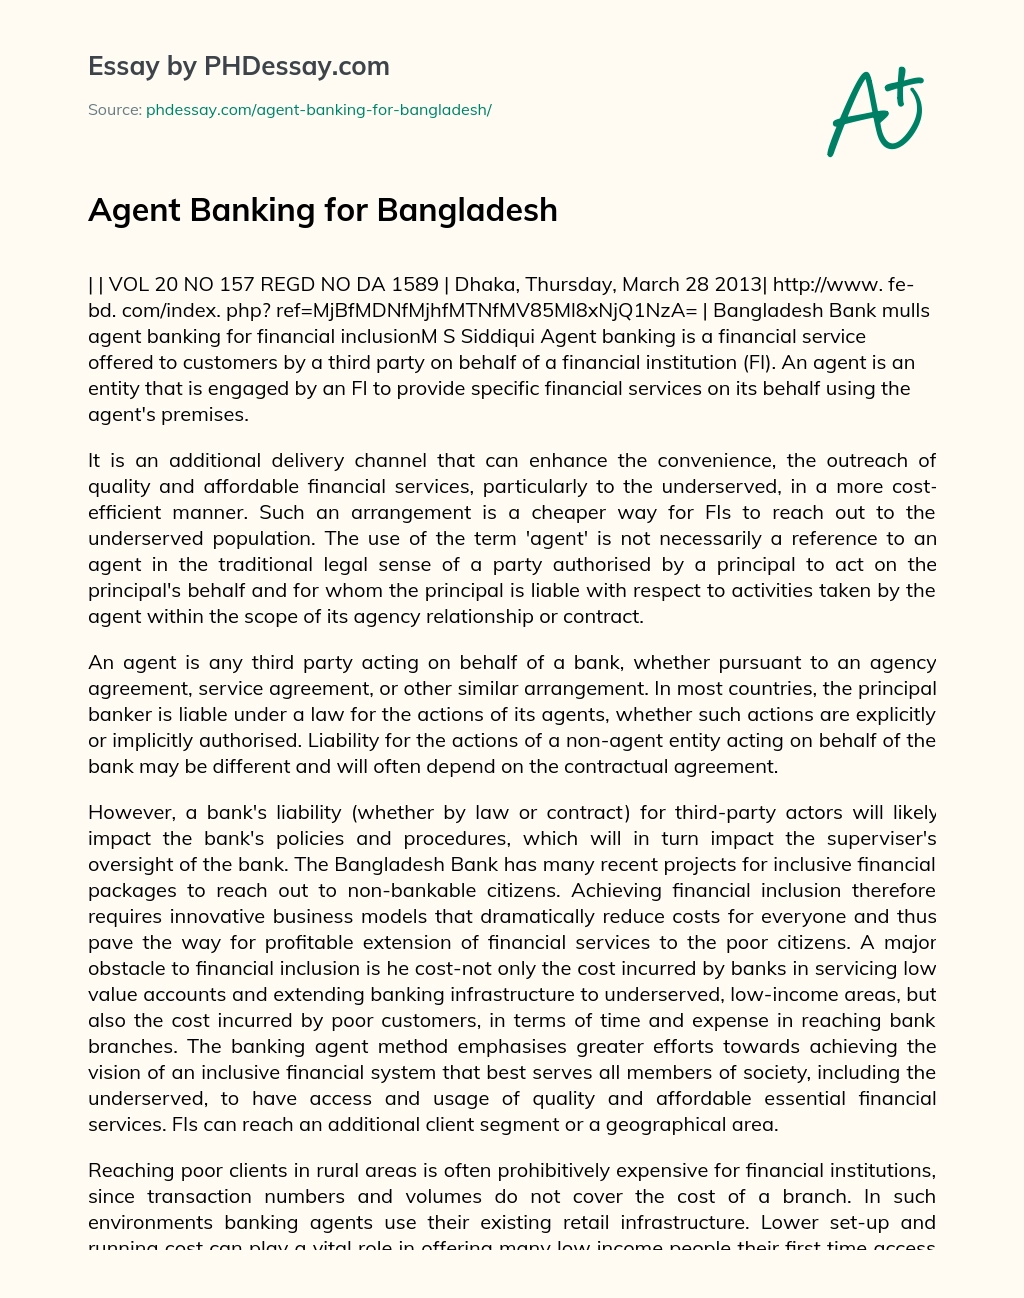 Agent Banking for Bangladesh essay